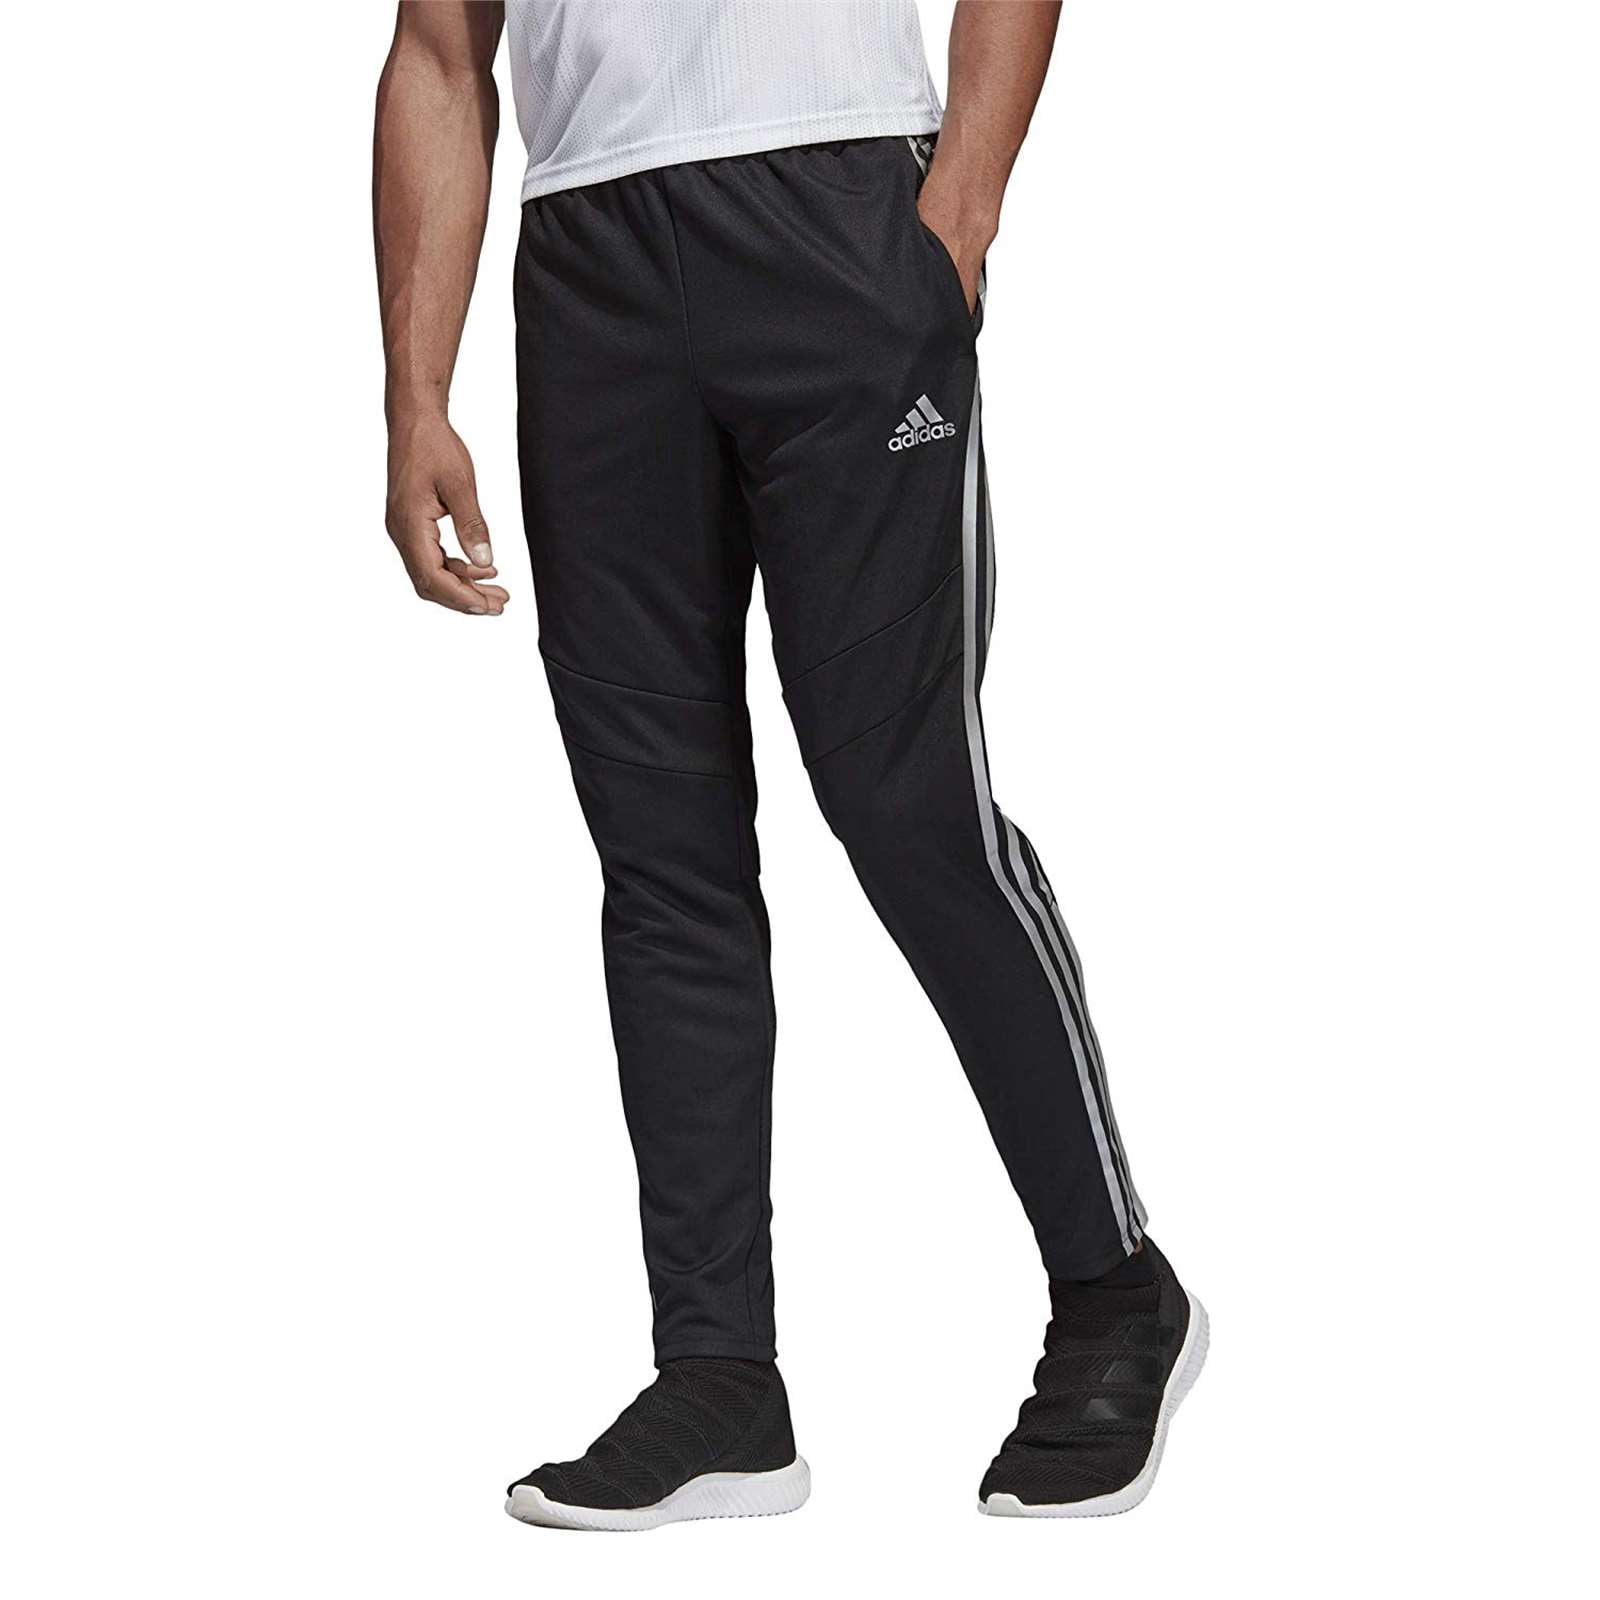 New Tiro 19 Men's Athletic Workout Training Slim Fit Pants - Walmart.com